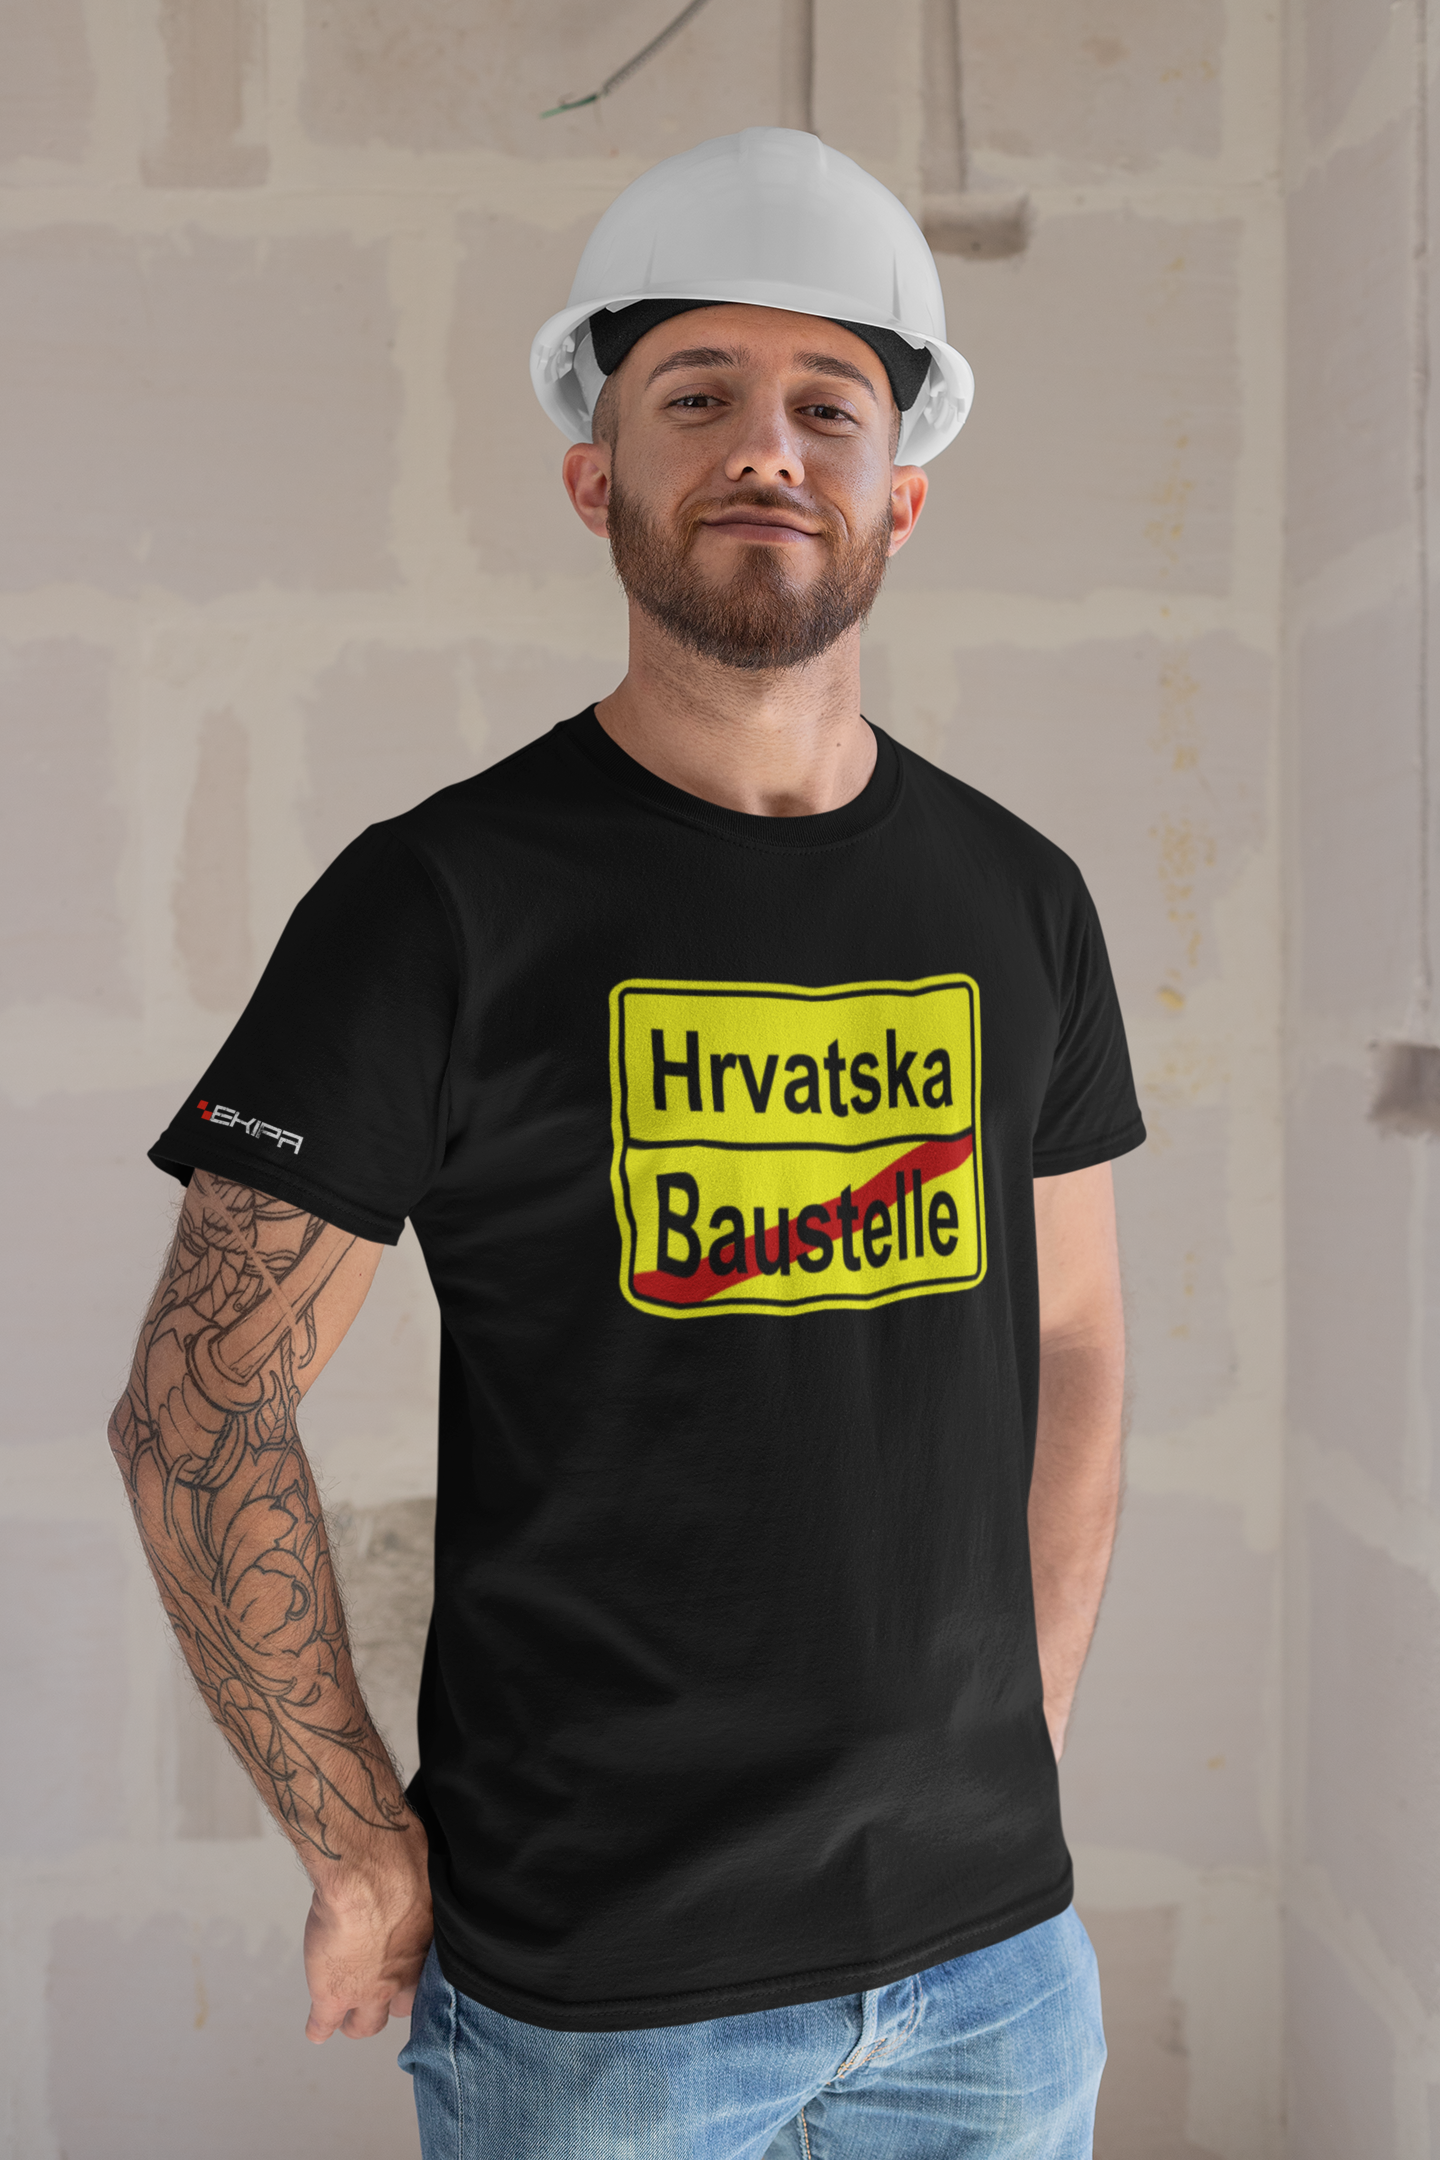 "Work Croatia" T-Shirt